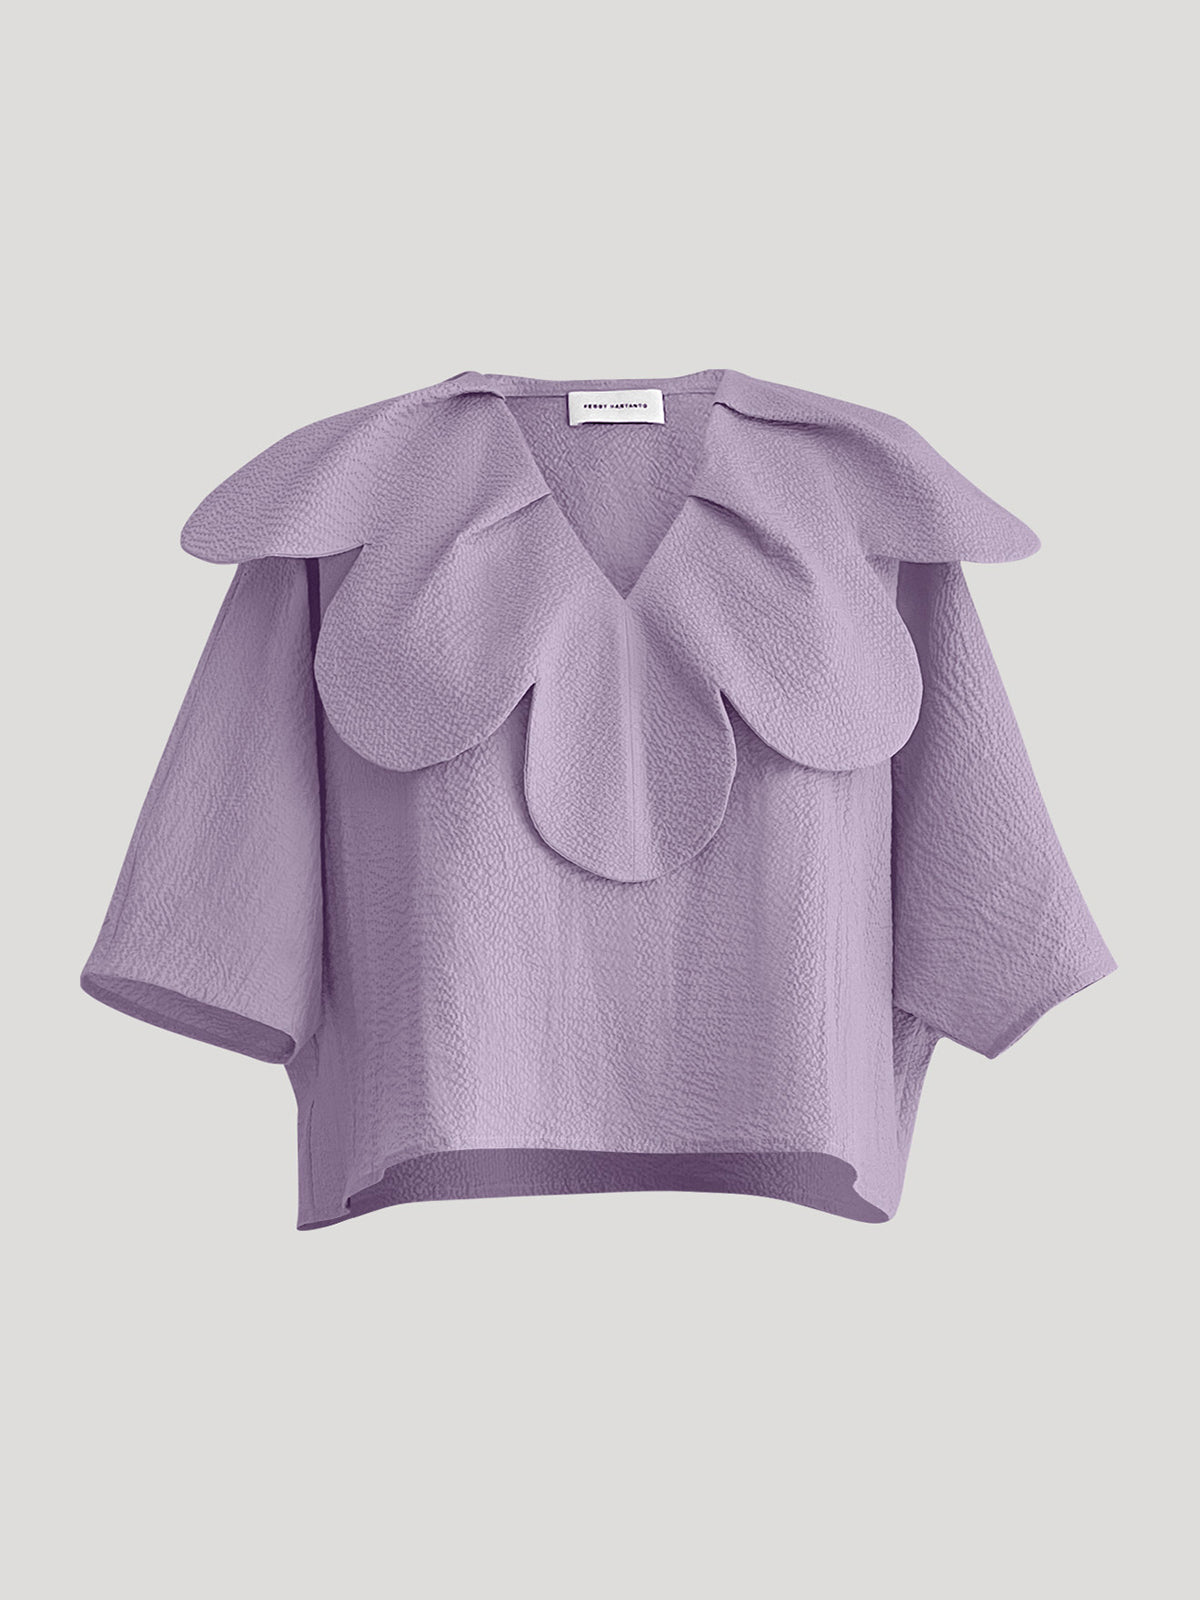 Dames lavender purple scalloped blouse